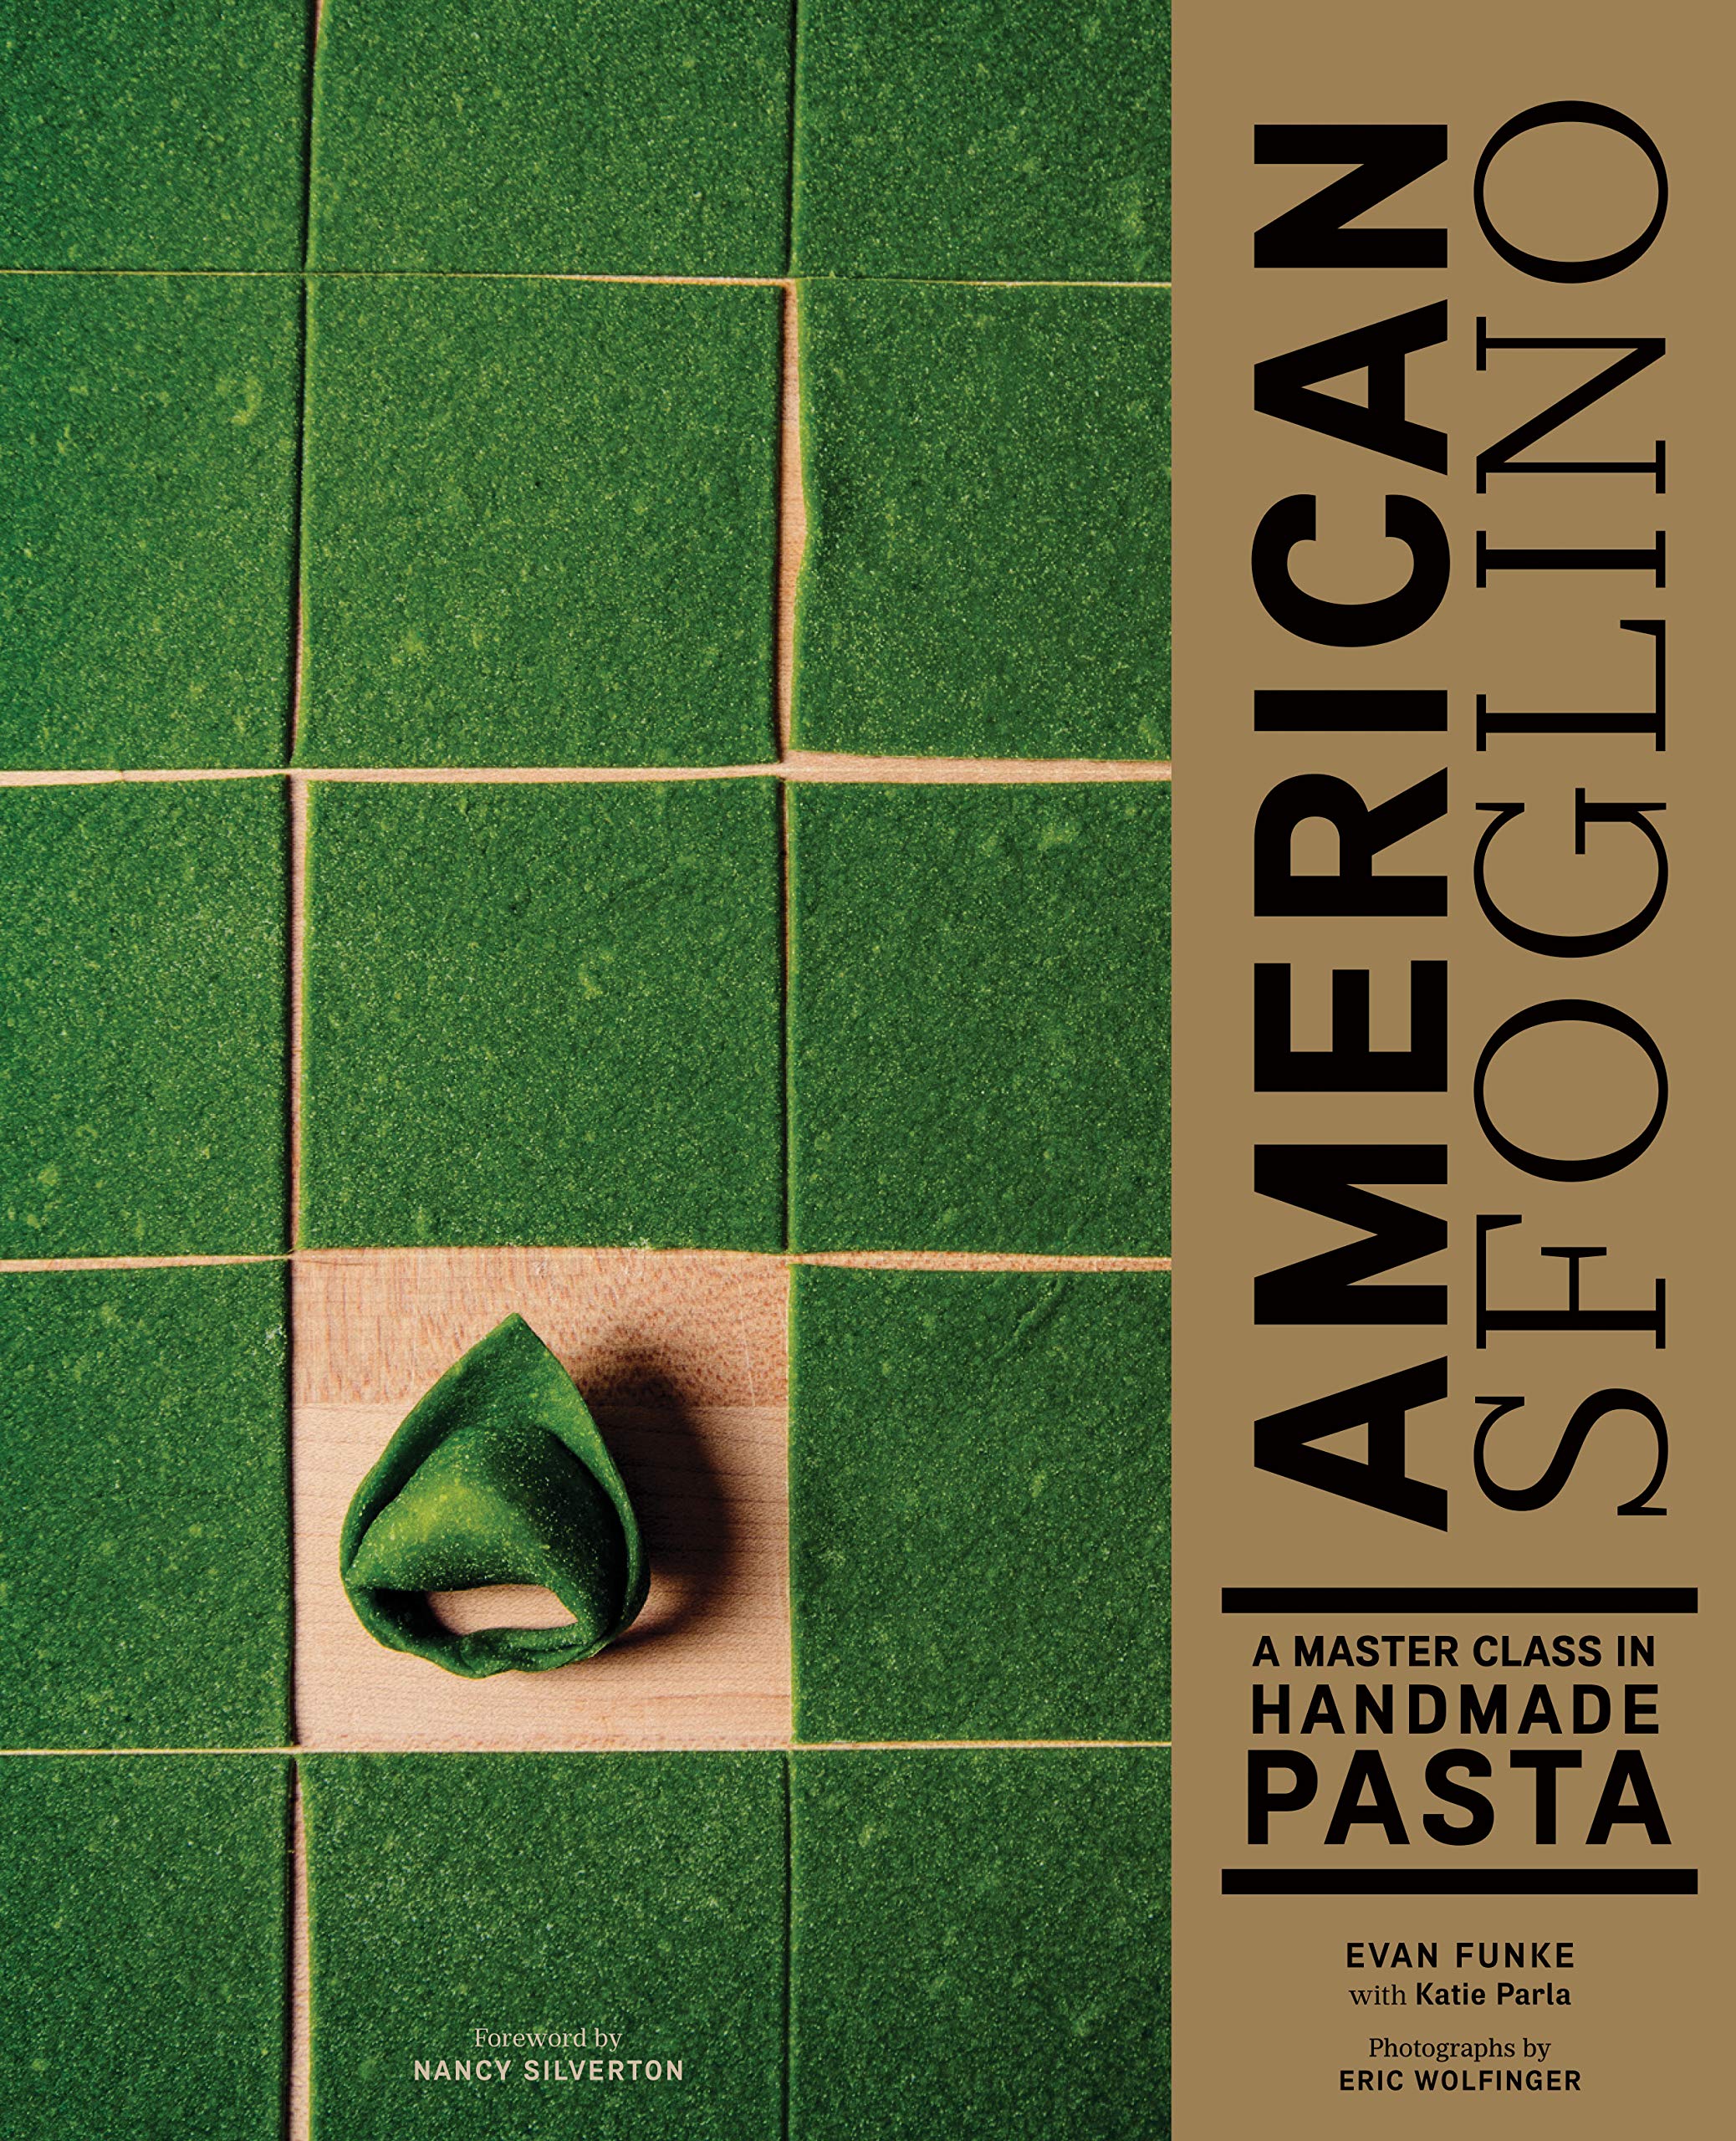 American Sfoglino: A Master Class in Handmade Pasta (Evan Funke)